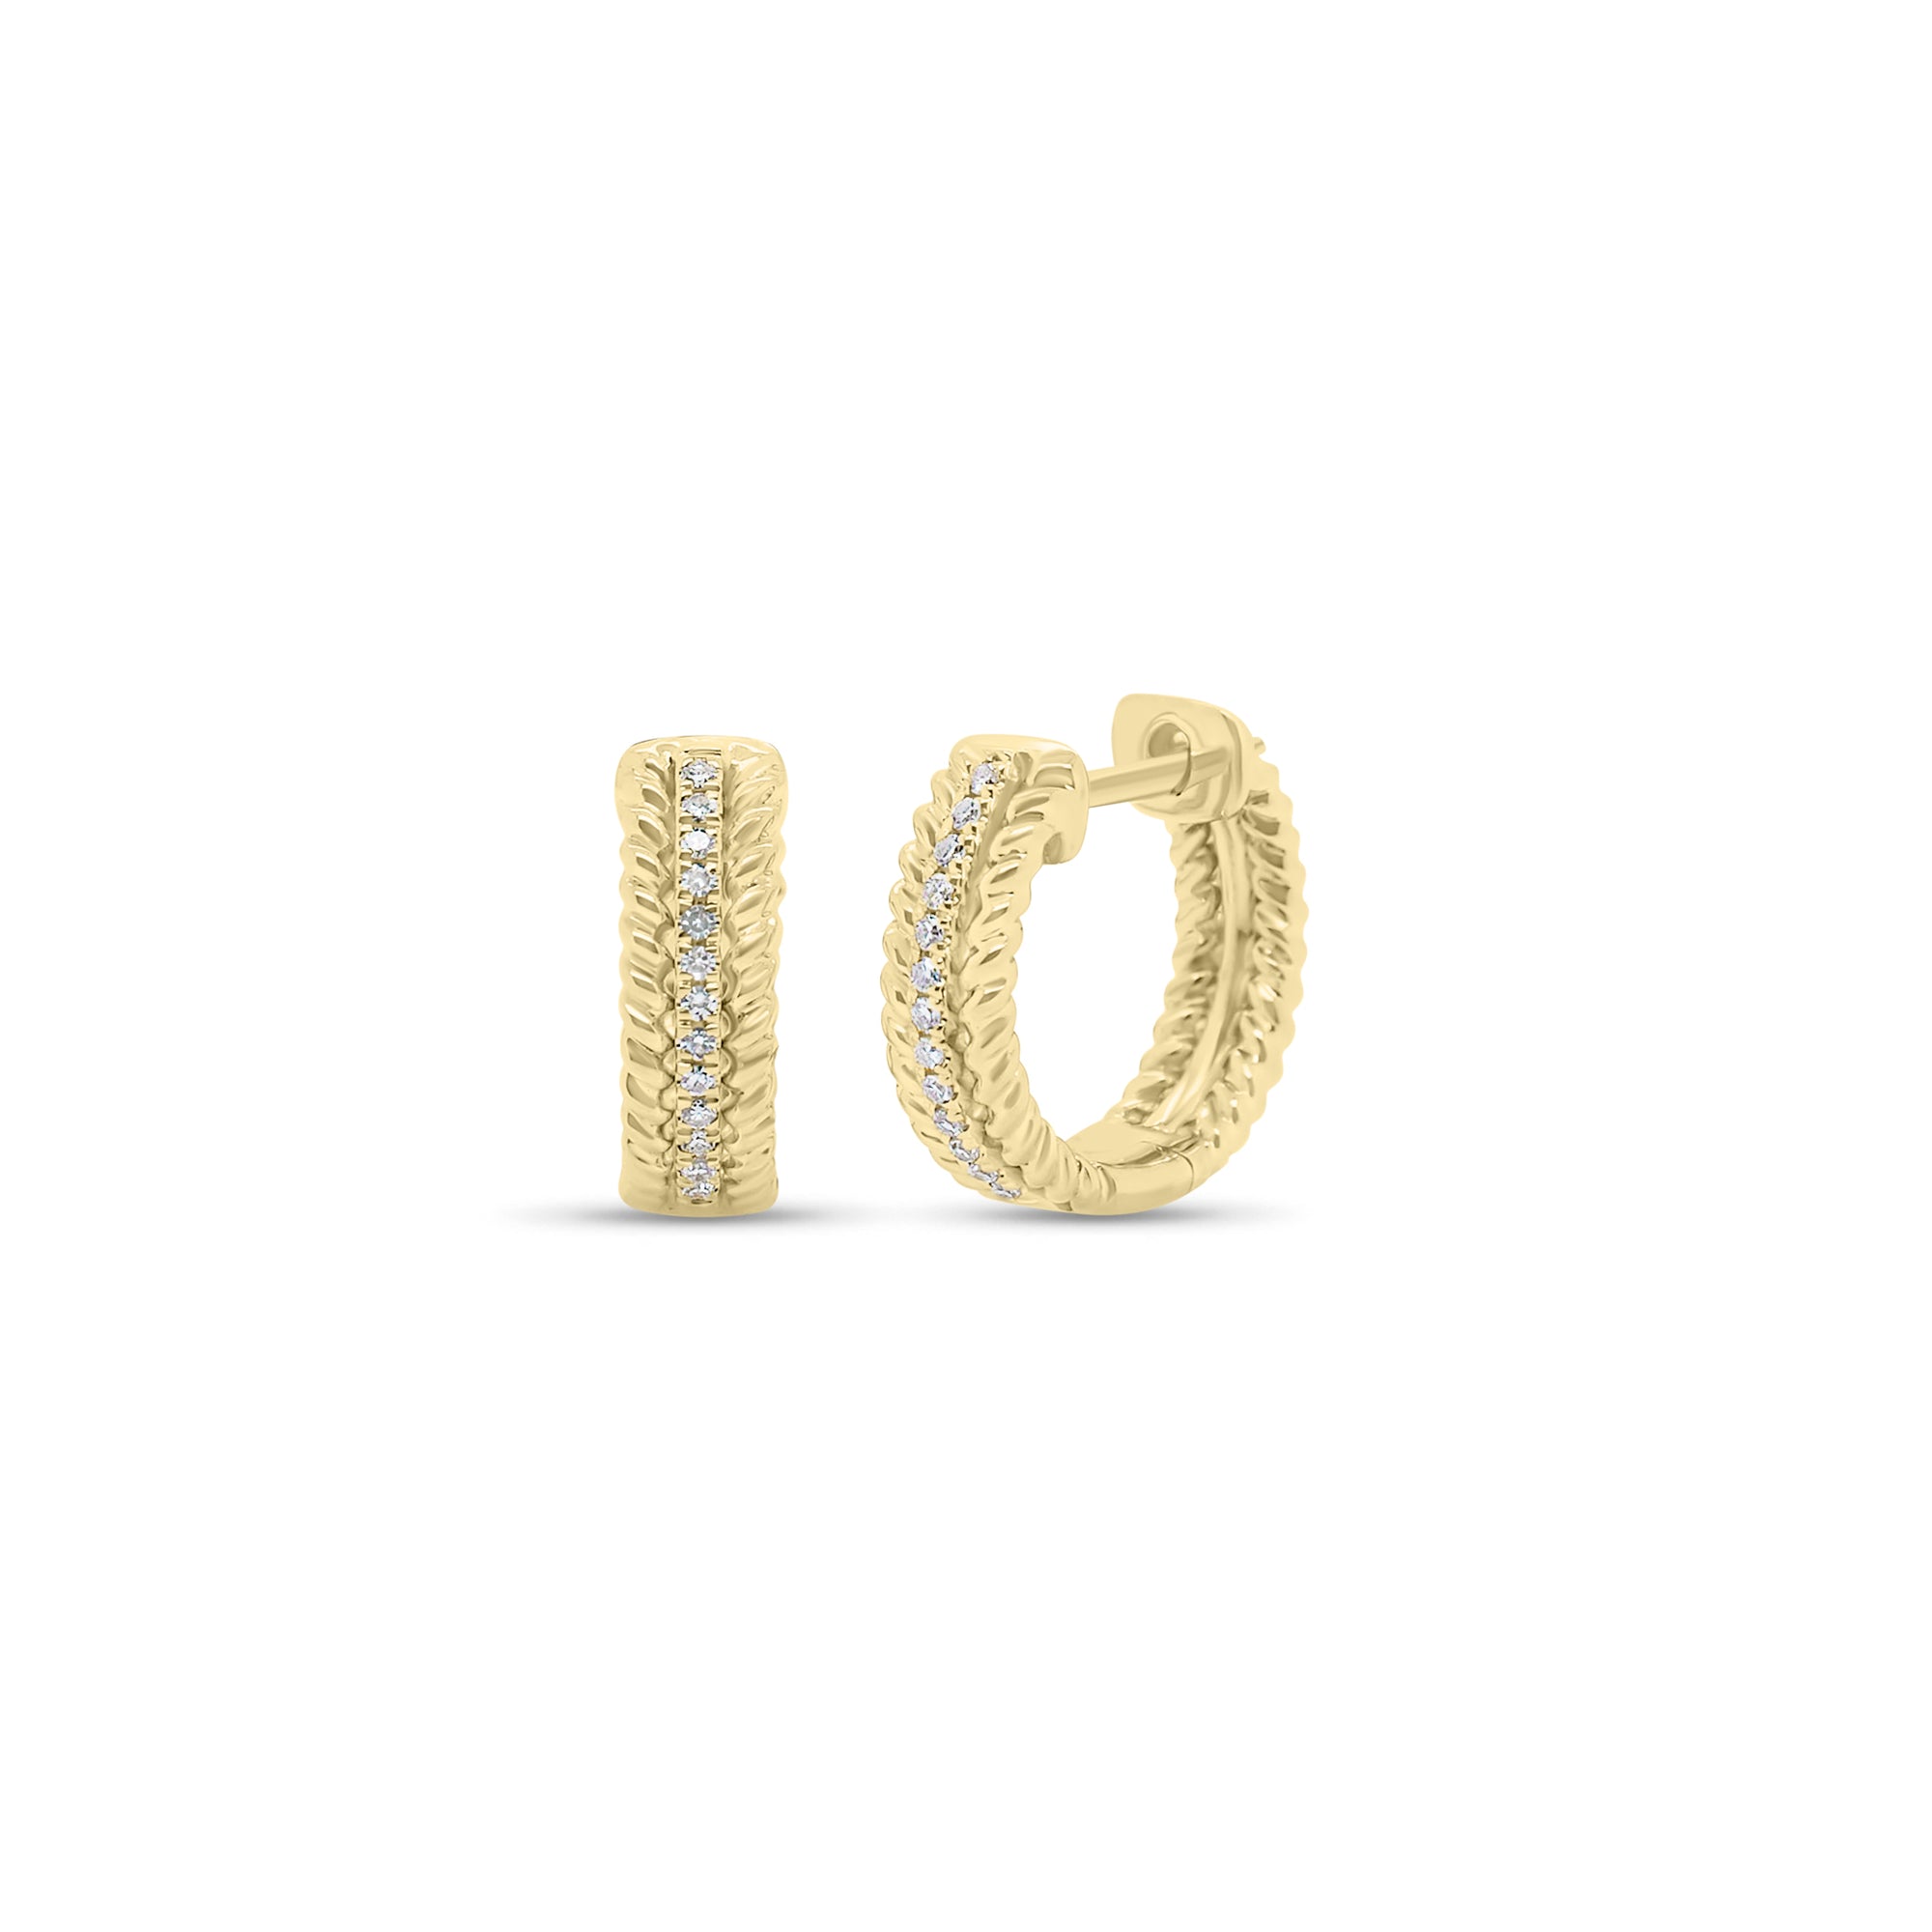 Diamond & Braided Gold Huggie Earrings - 14K gold weighing 3.20 grams  - 26 round diamonds weighing 0.07 carats